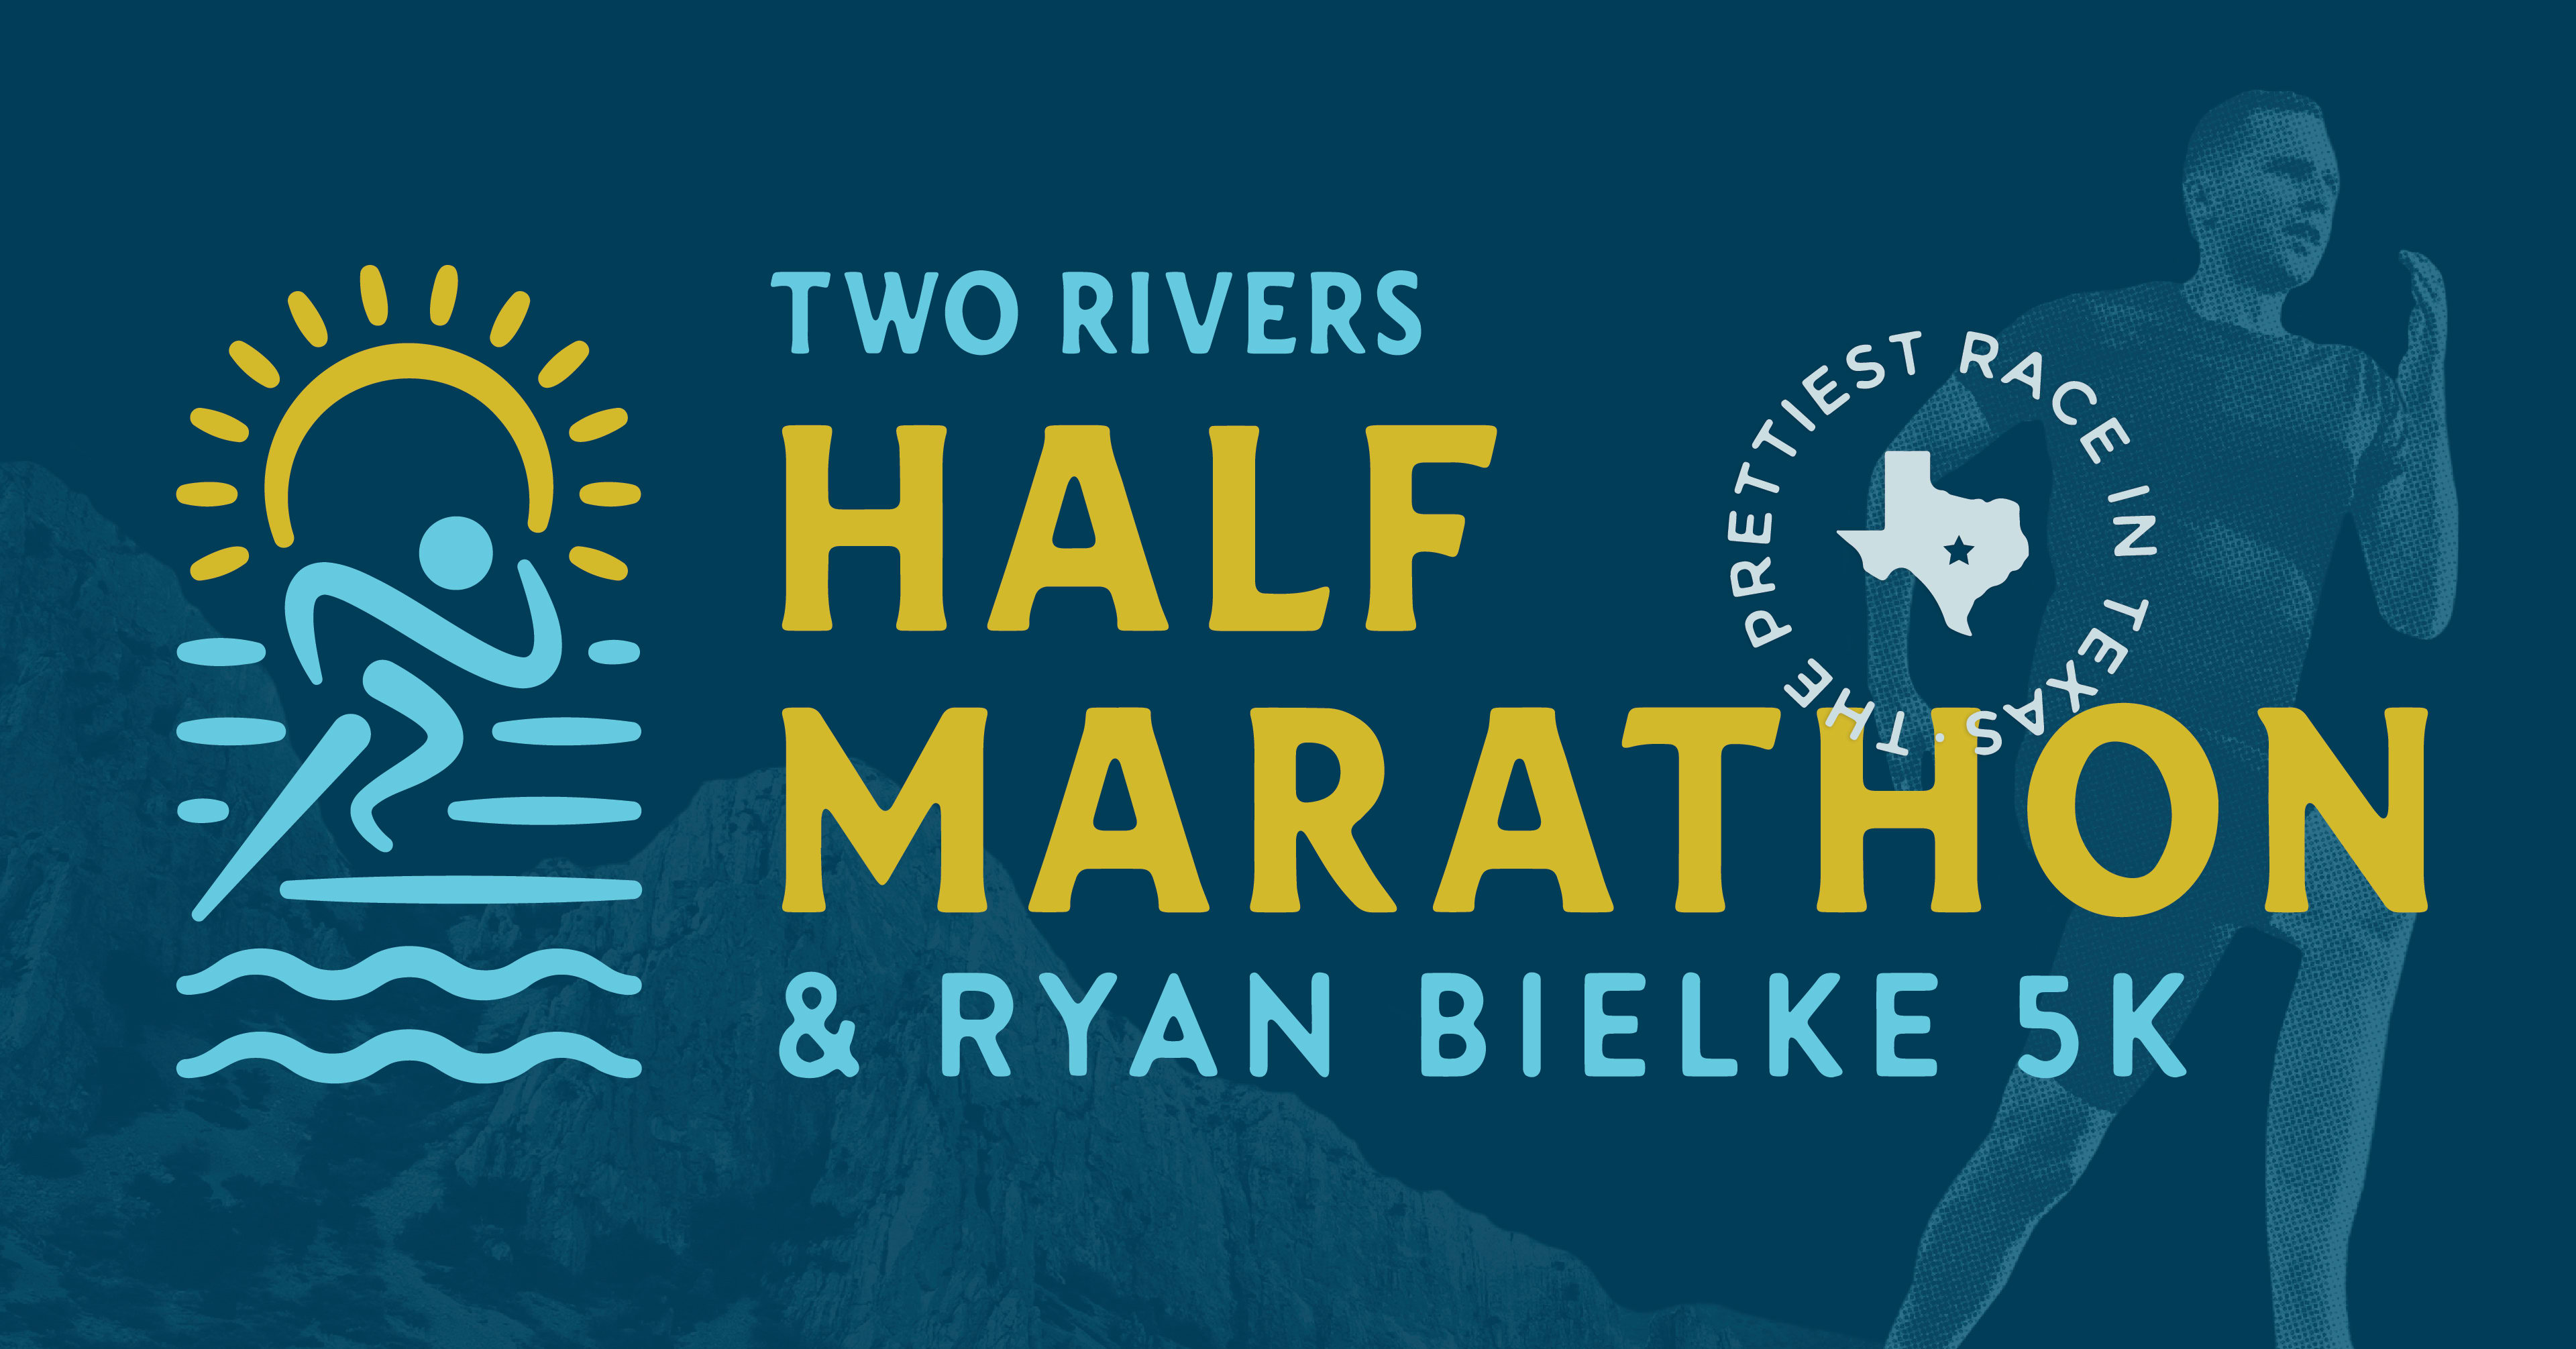 Two Rivers Half Marathon Running in New Braunfels